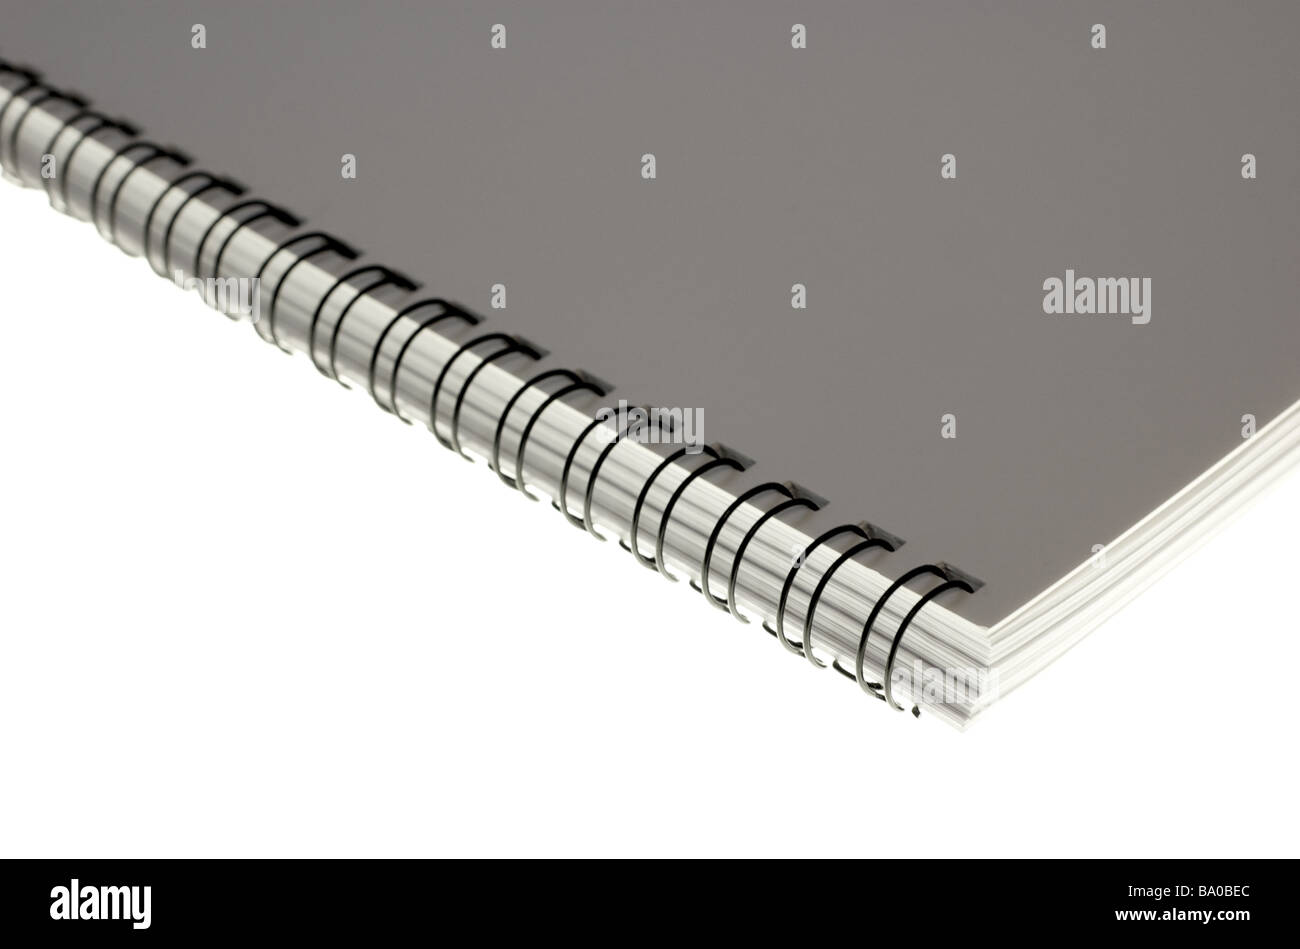 https://c8.alamy.com/comp/BA0BEC/simple-photo-of-blank-spiral-bound-notebook-BA0BEC.jpg